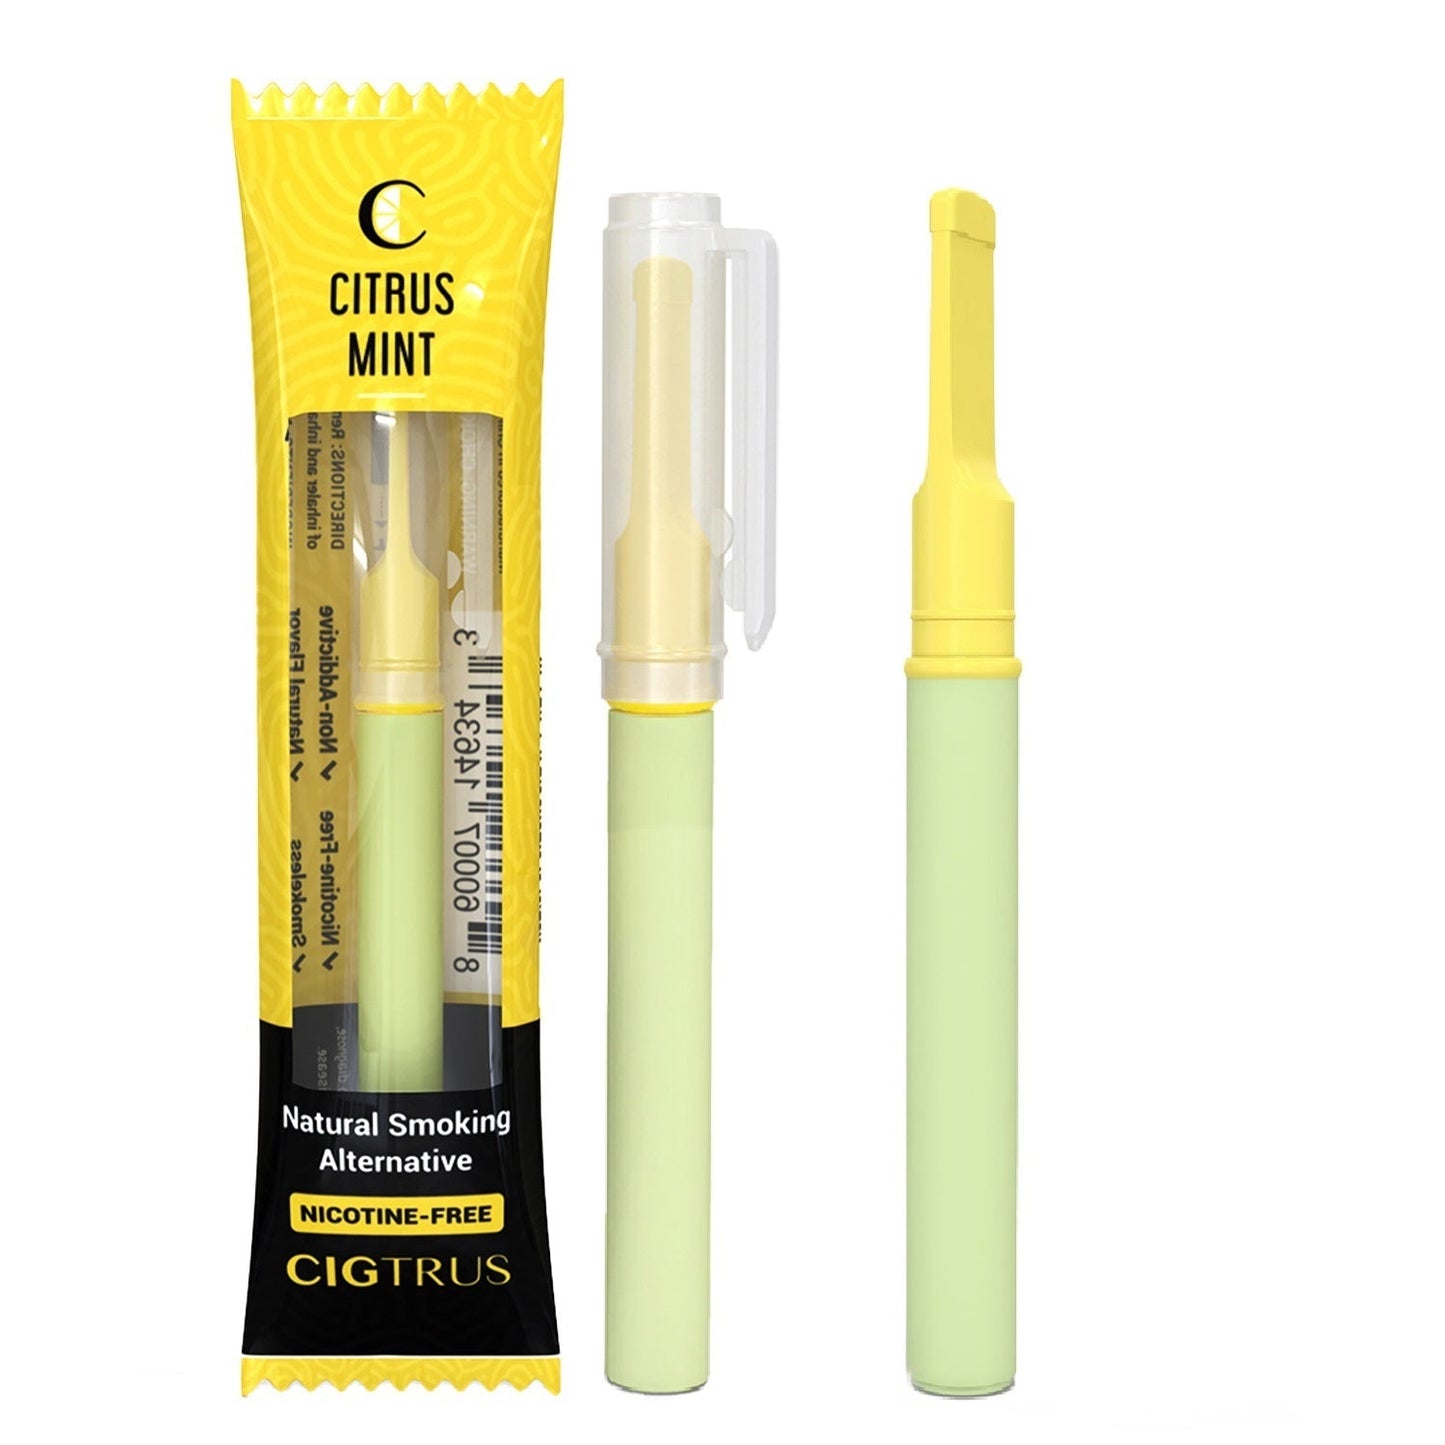 Cigtrus Smokeless Oxygen Air Inhaler Oral Fixation Relief Natural Quit Aid Behavioral Support – Pick Your Flavor - cigtrus.comcigtrus.com